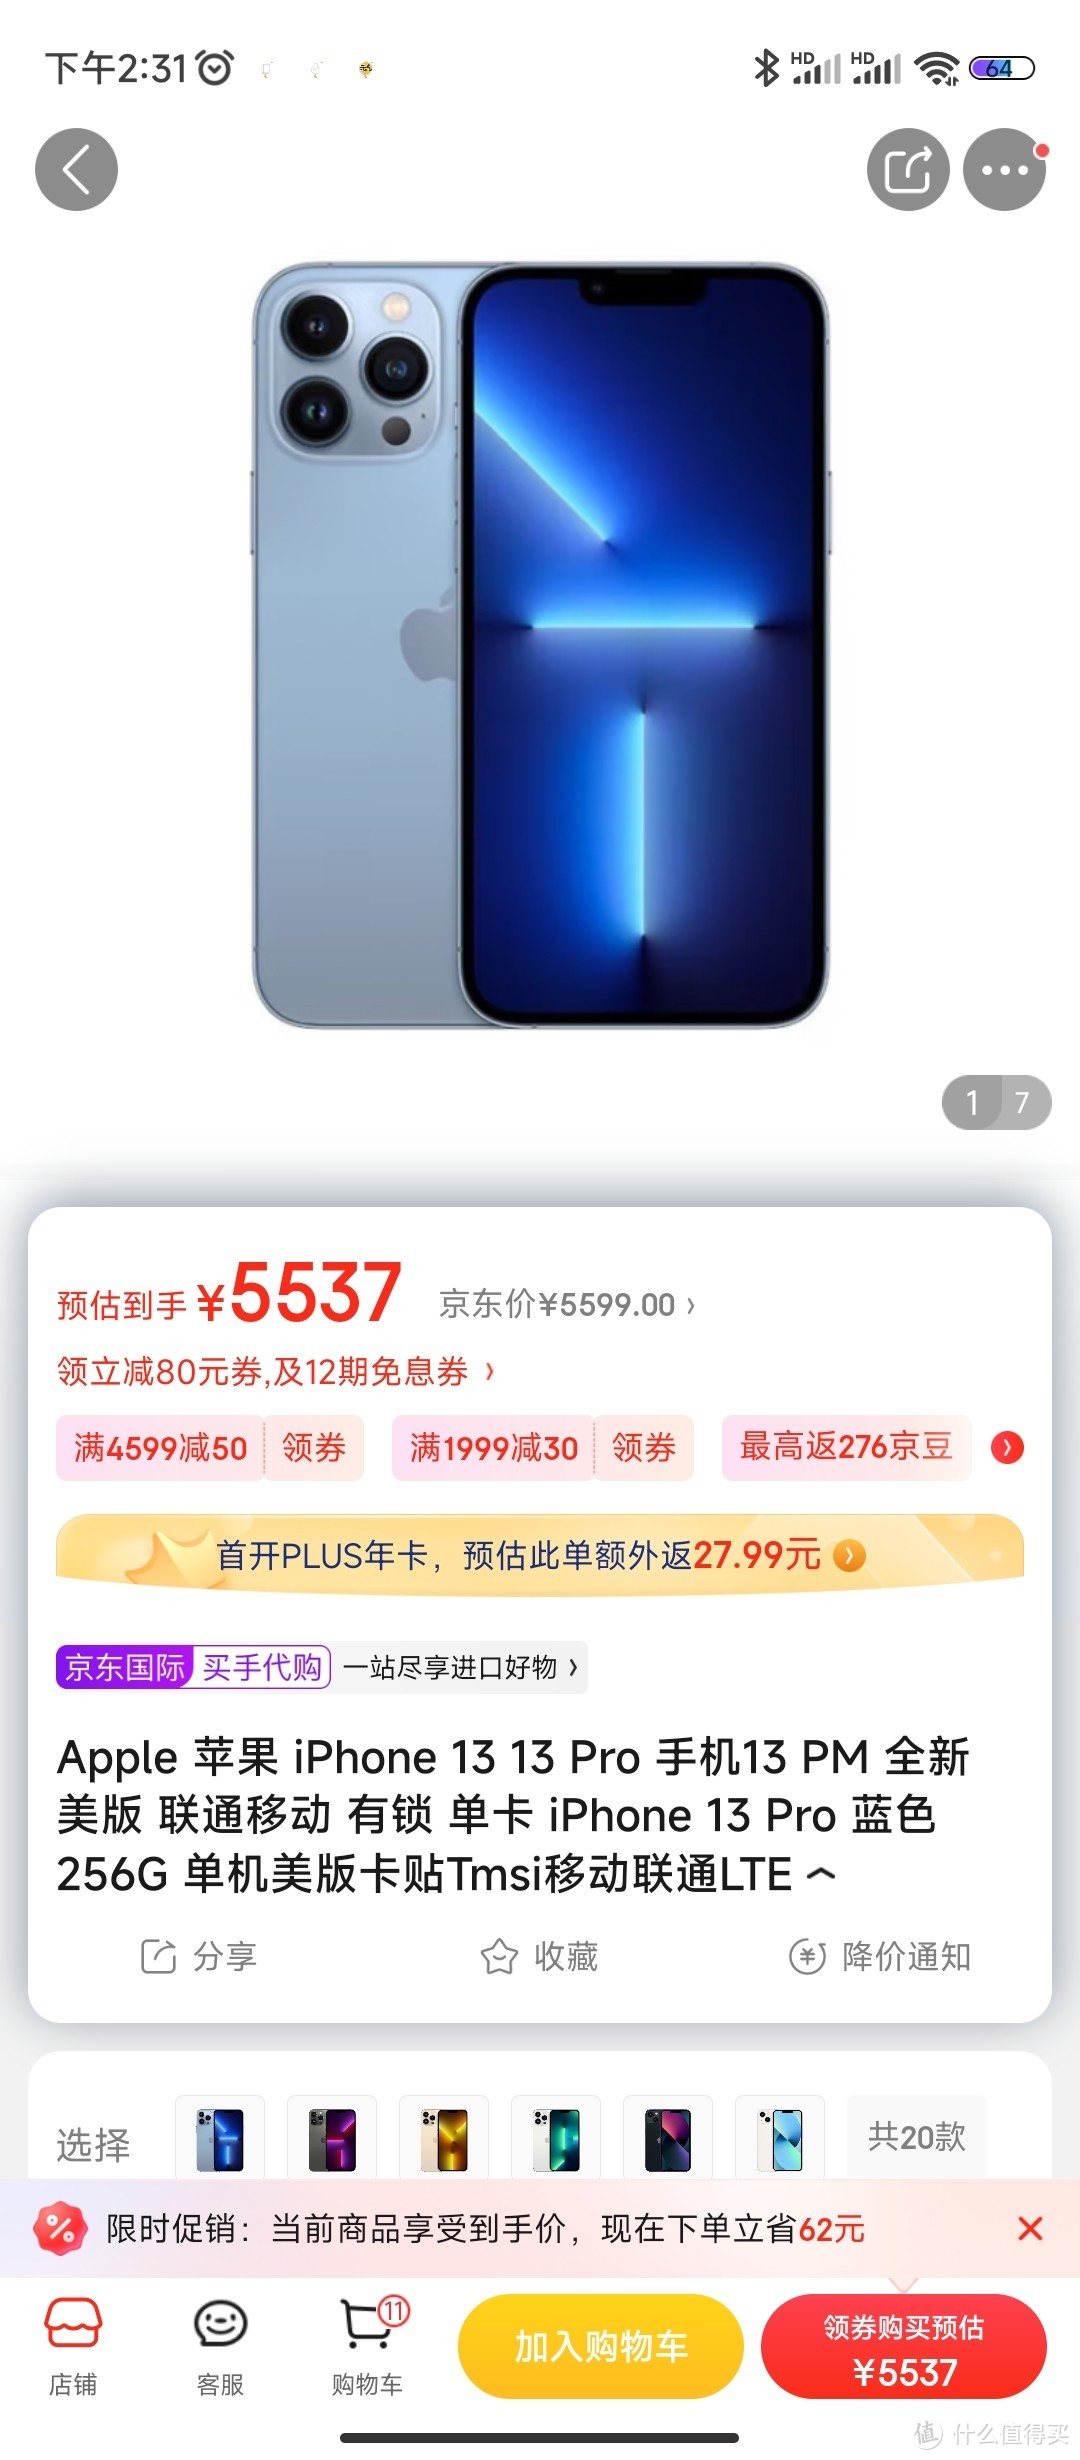 Apple 苹果 iPhone 13 13 Pro 手机13 PM 全新 美版 联通移动 有锁 单卡 iPhone 13 Pro 蓝色 256G 单机Apple